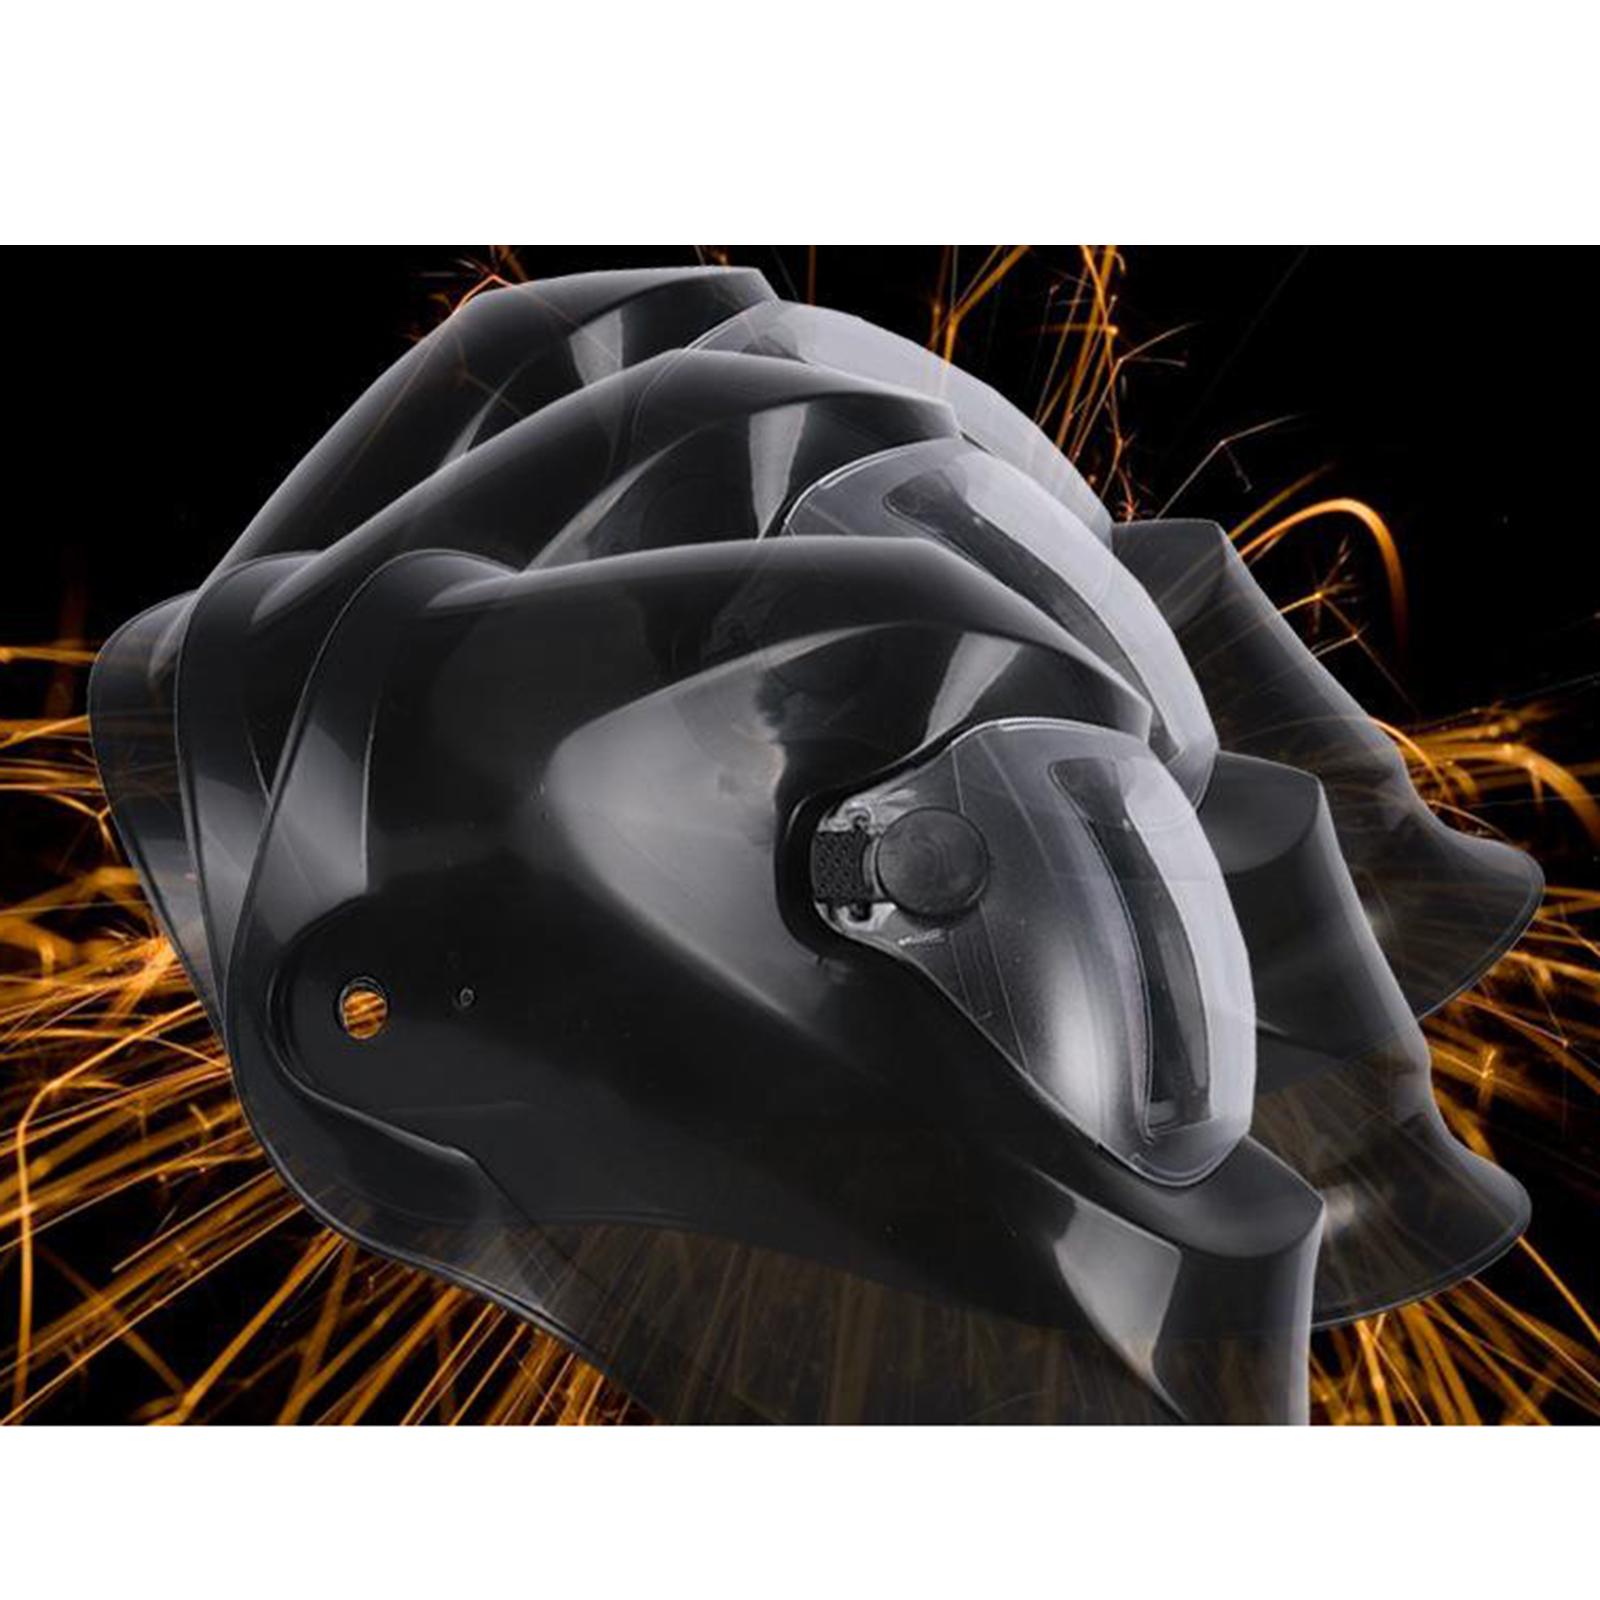 New Solar Auto Darkening Welding Helmet Mask ARC TIG MAG Headgear UV Protect